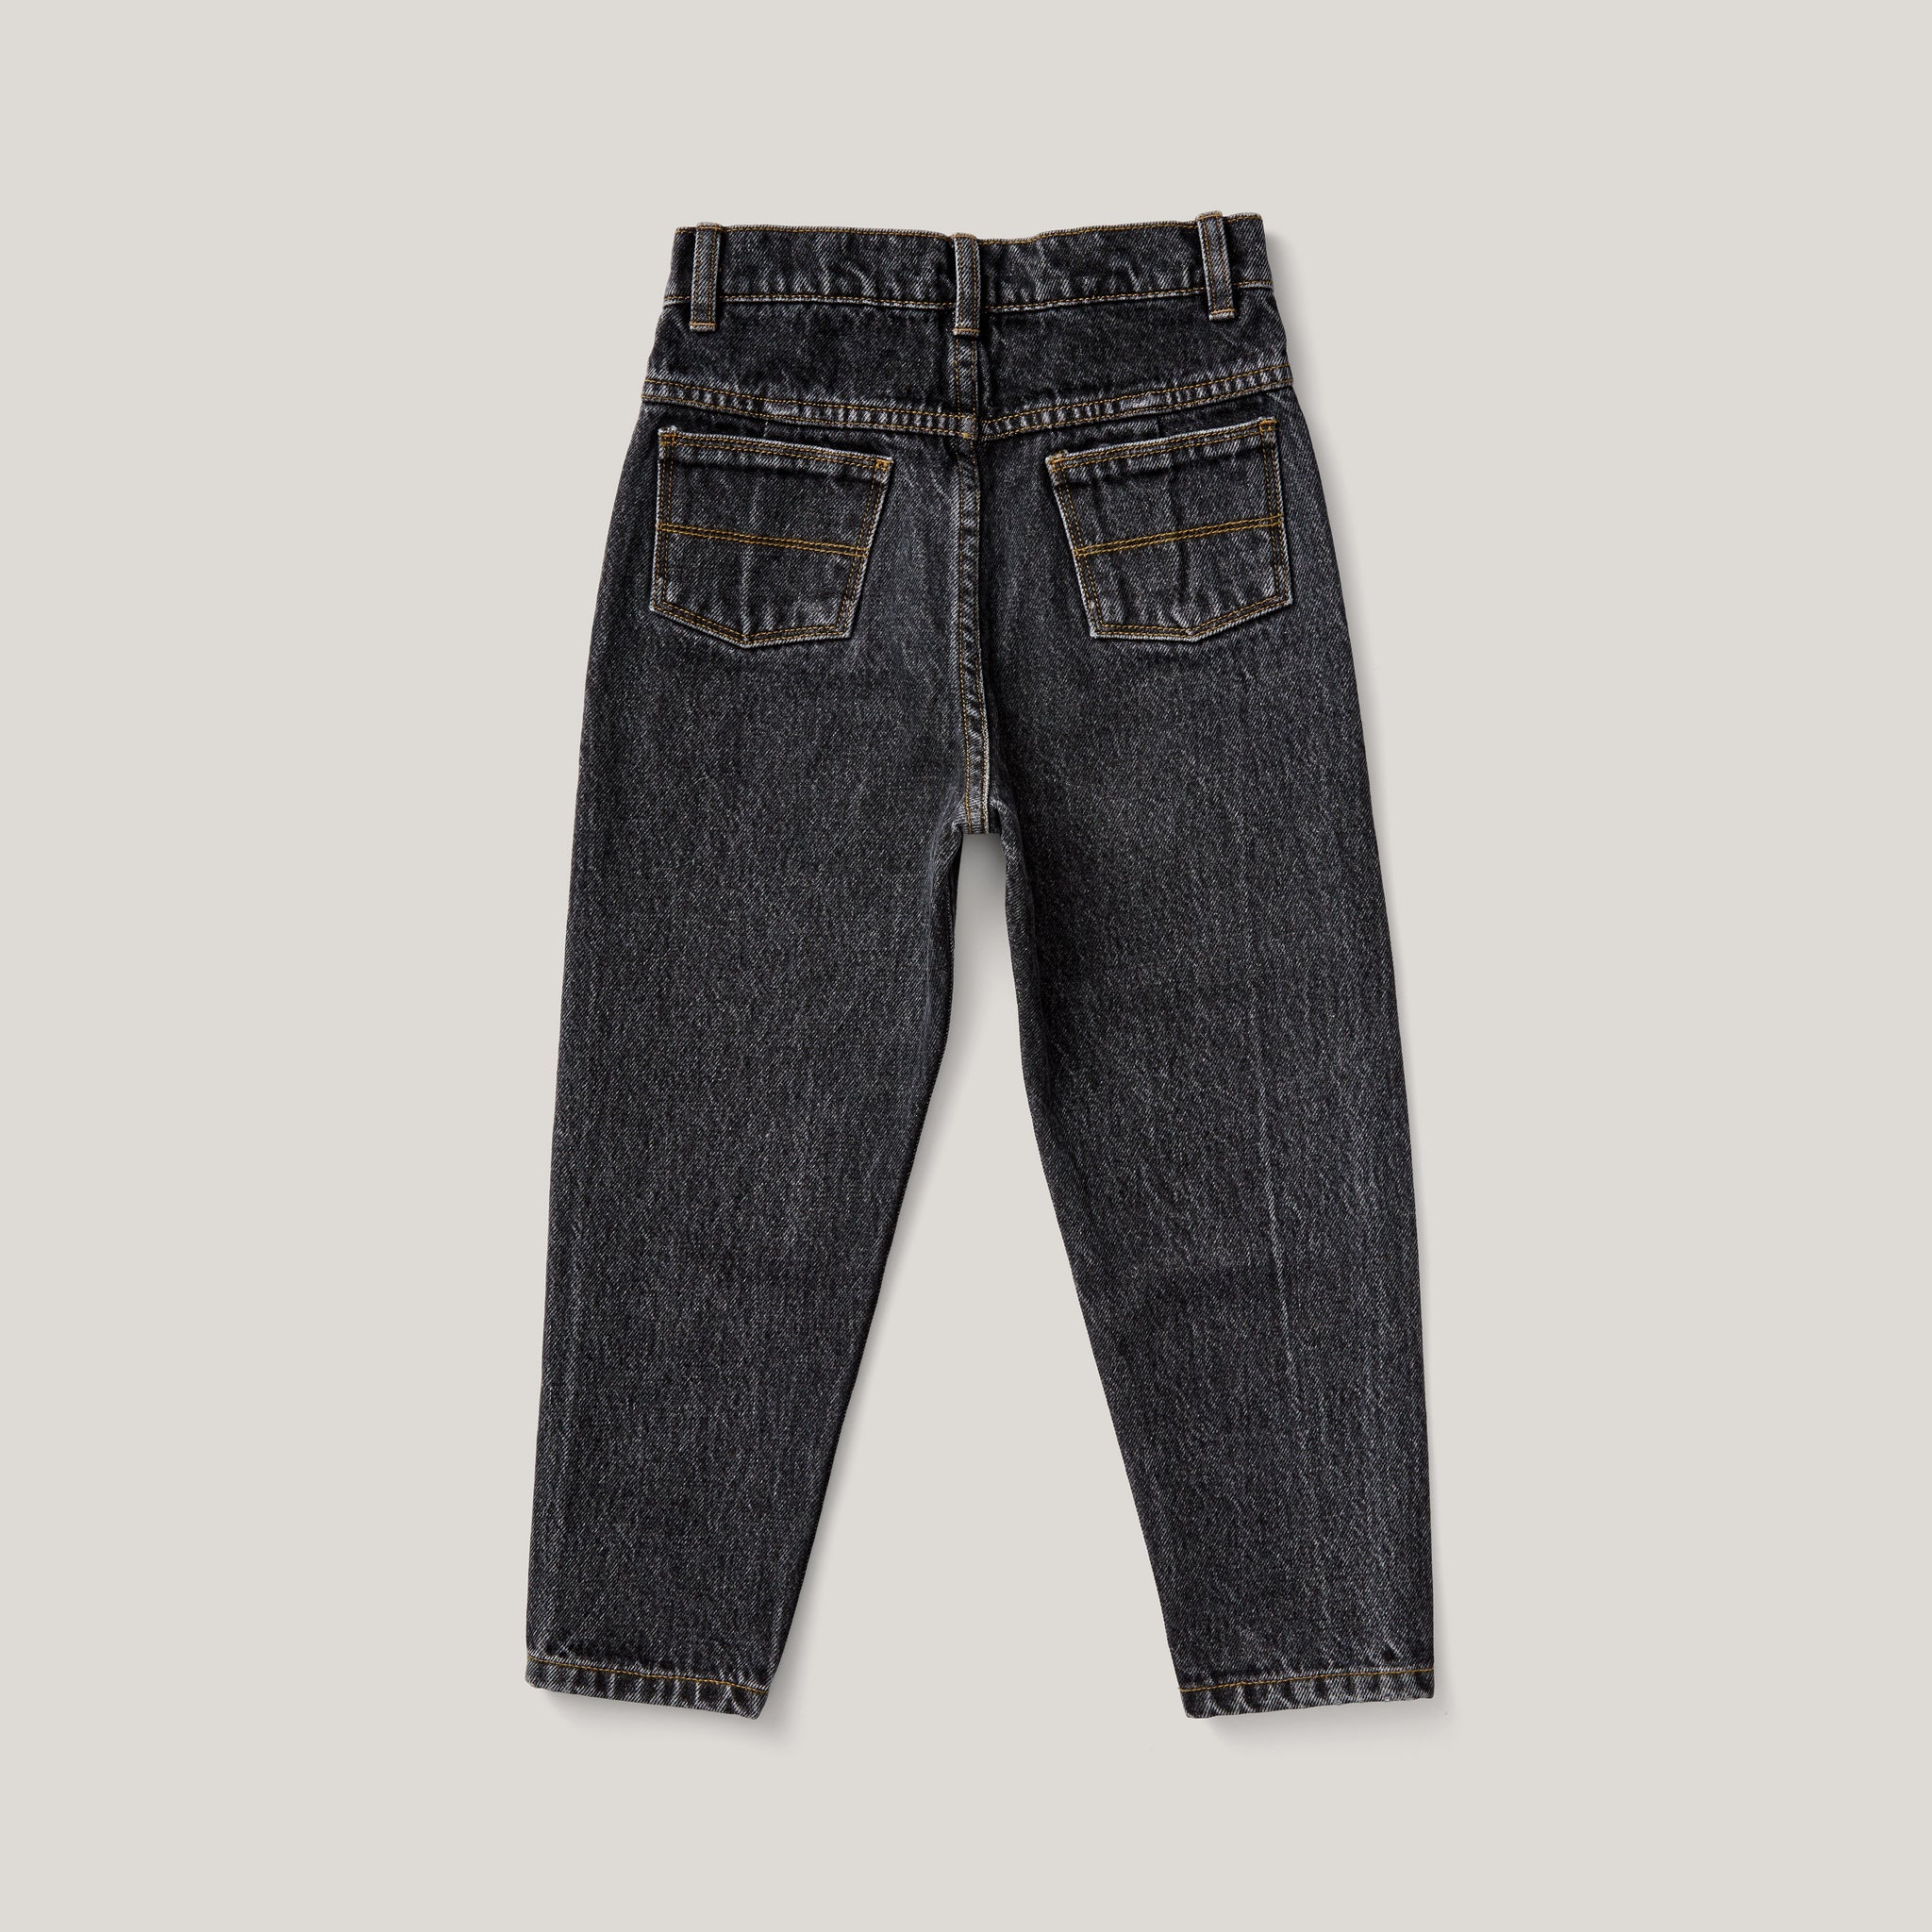 Vintage Jean, Black Denim